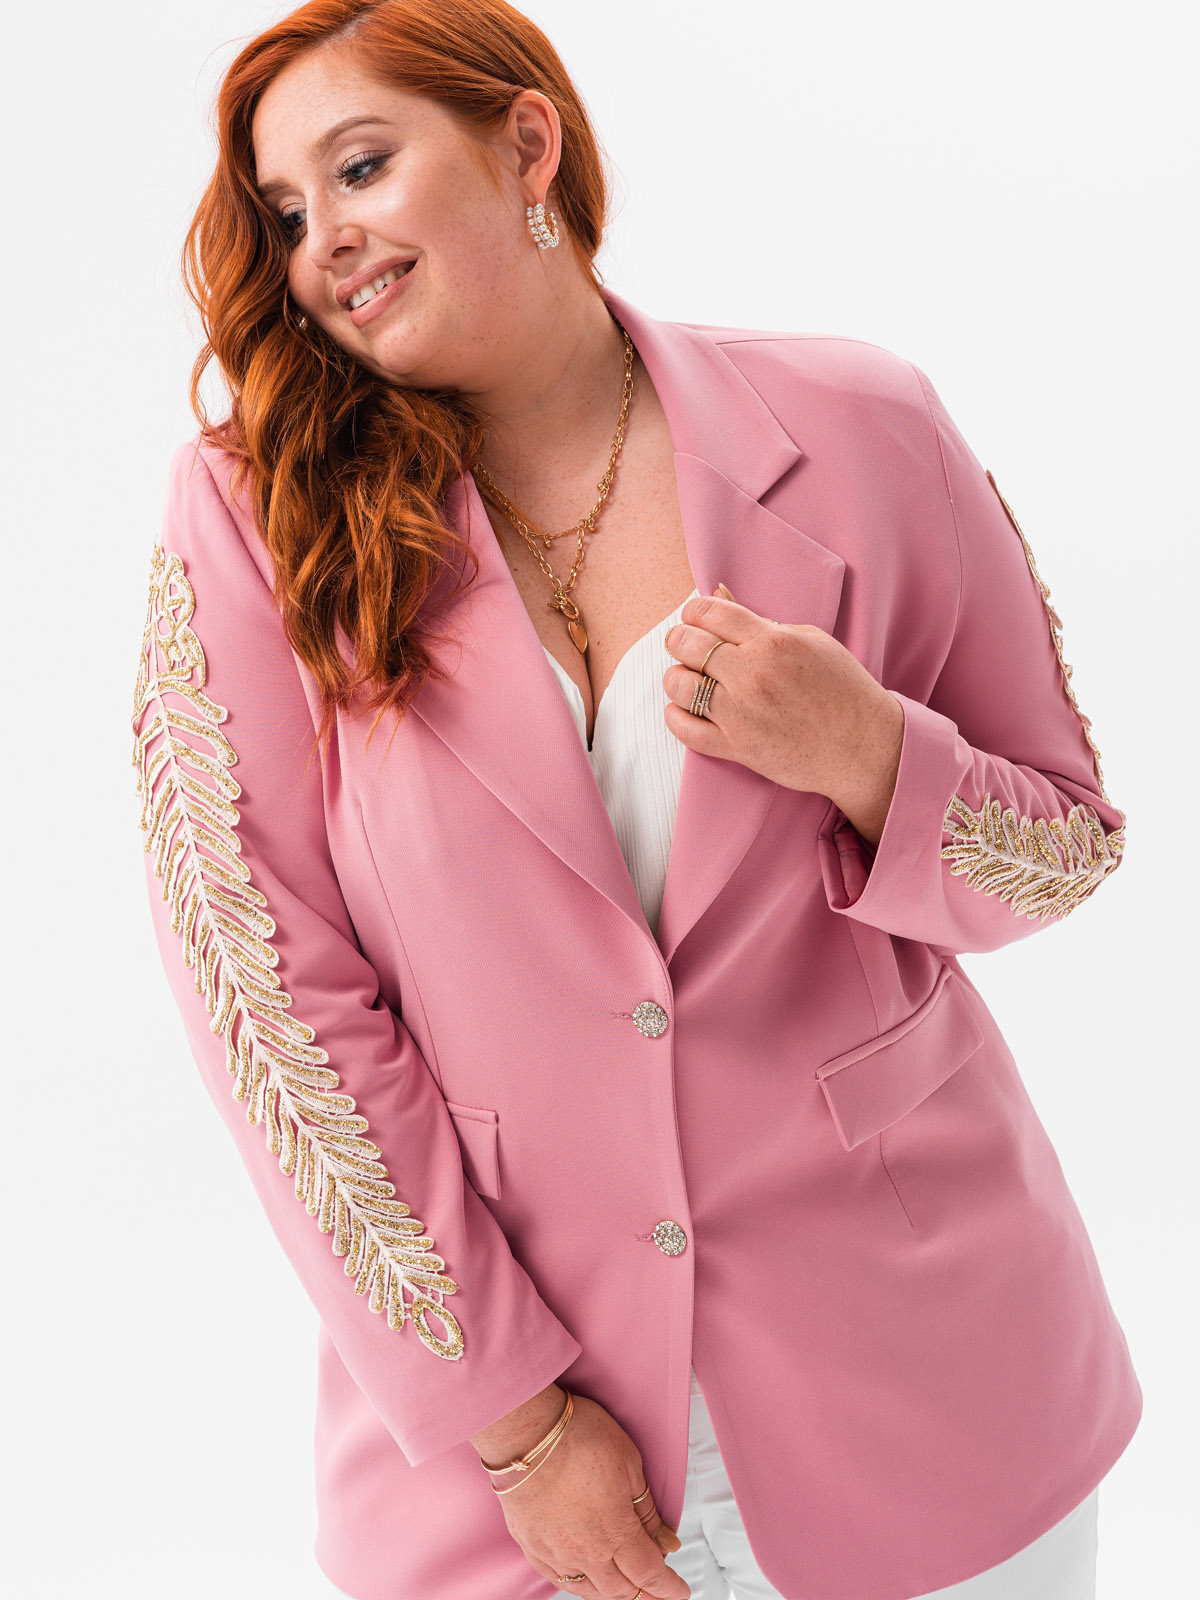 Women's blazer Plus Size MLR006 - pink ...